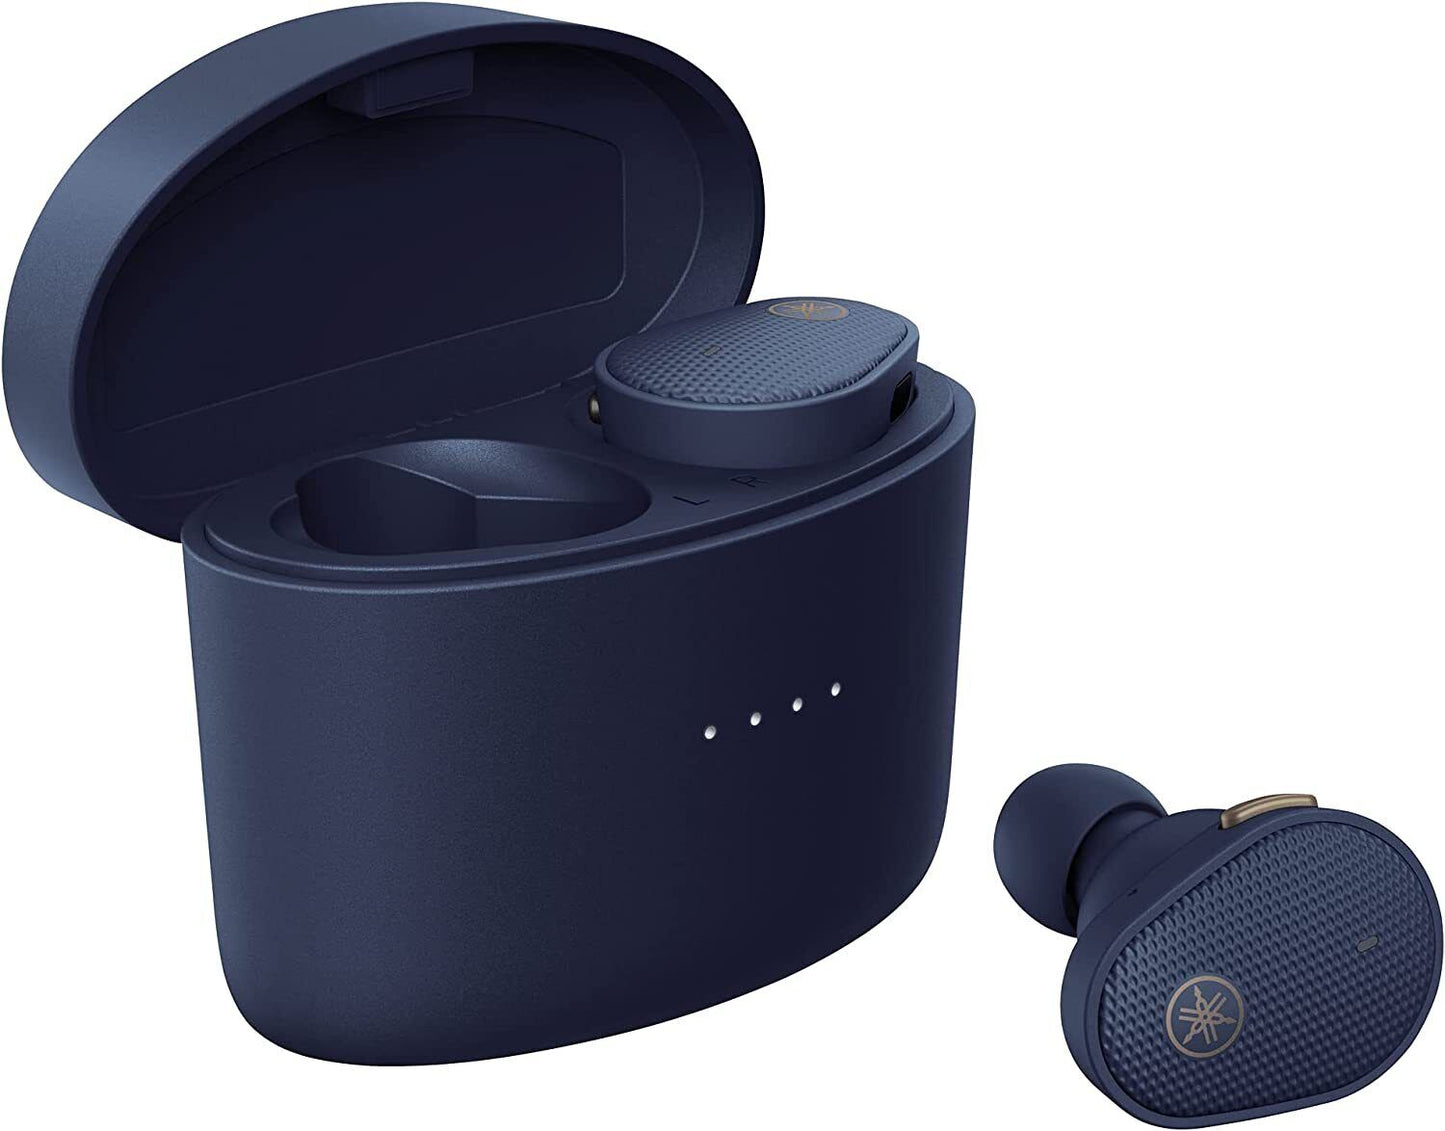 TW-E5BA TW-E5B (A) Blue YAMAHA Wireless Earbud Headphones Bluetooth Earphones